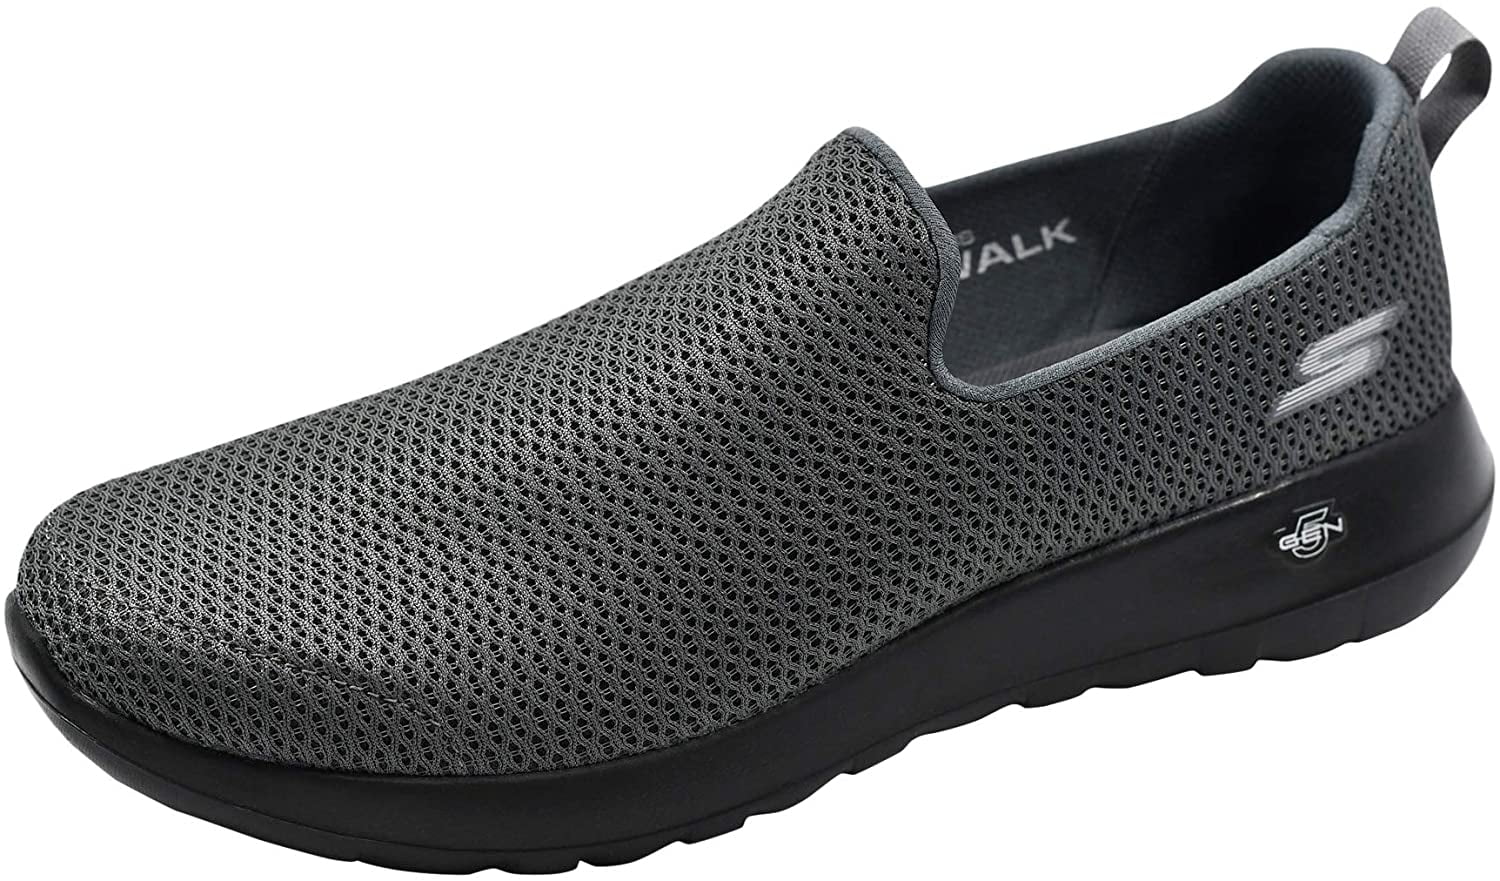 Skechers Men's Go Walk Max Slip-on Sneaker, Charcoal/Black, 13 M US